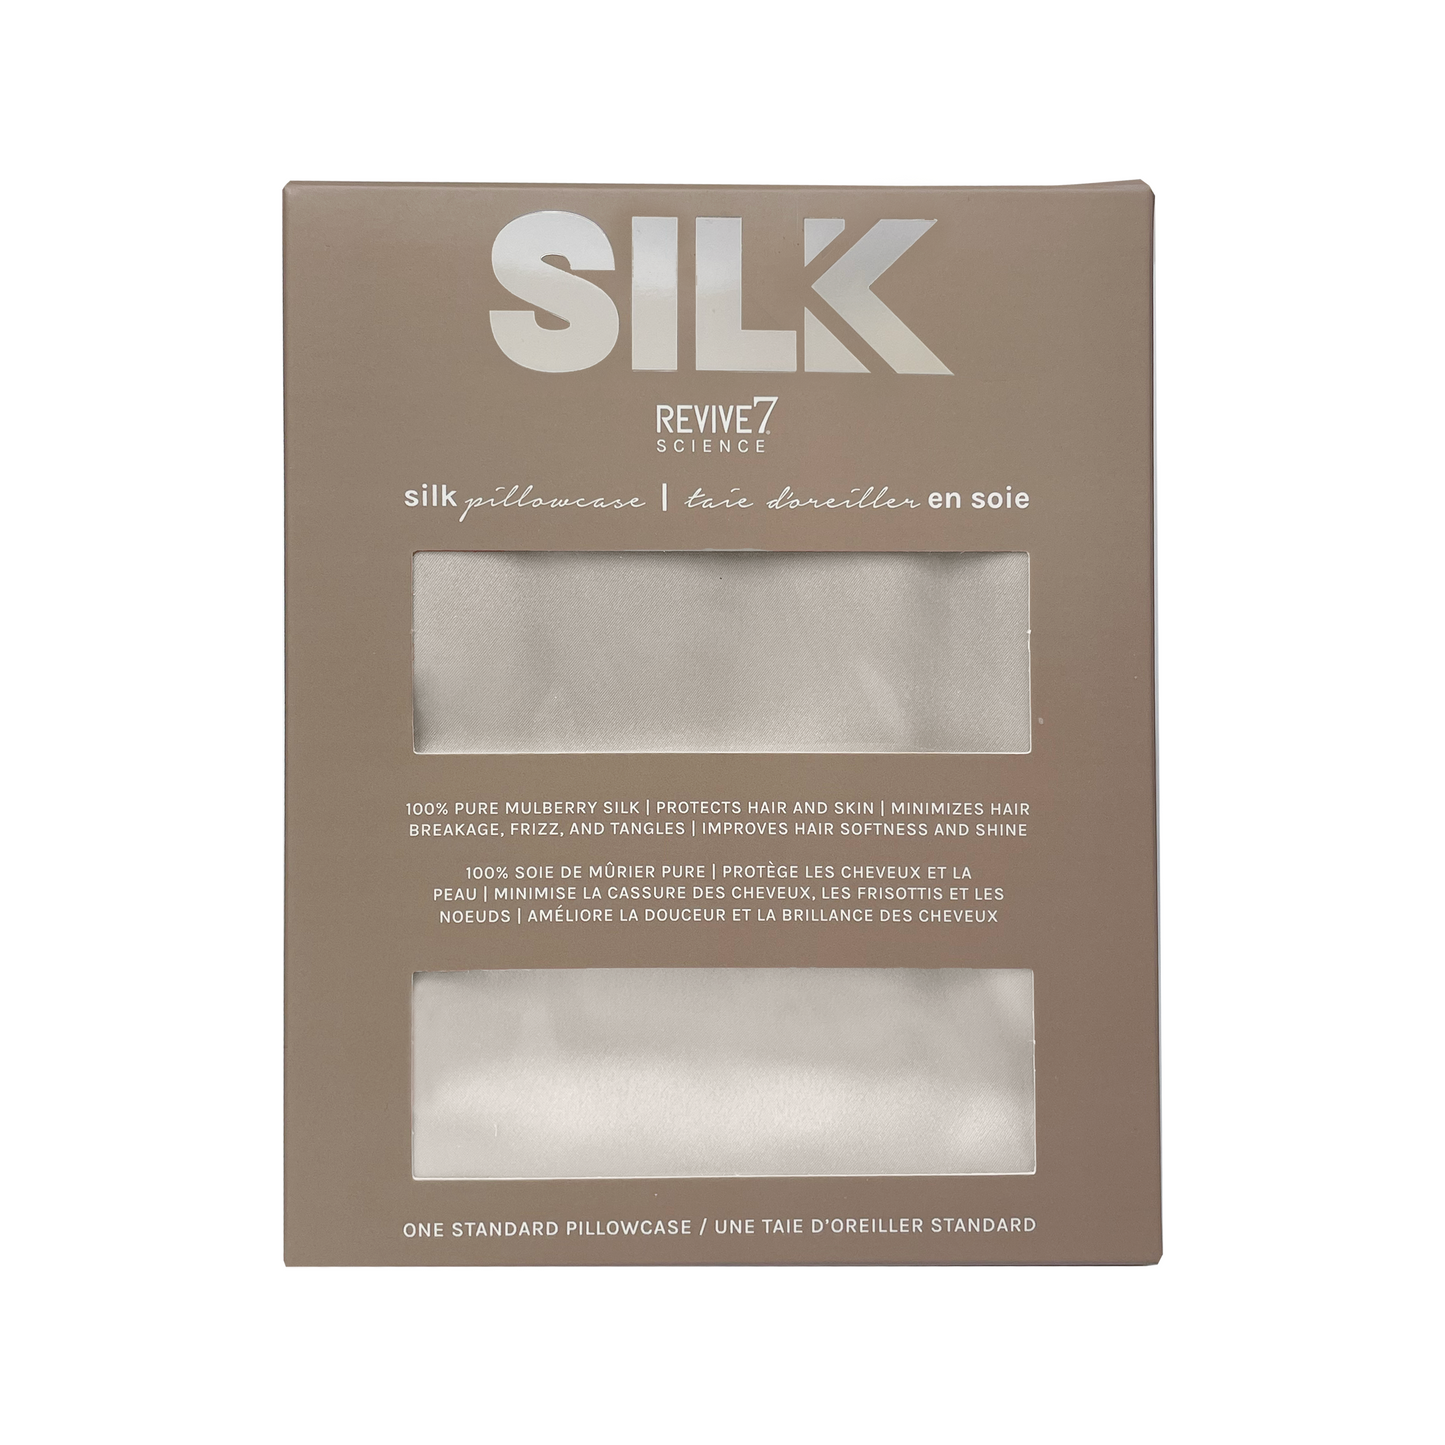 Revive7 SILK Pillowcase- LASHFOREVER CANADA